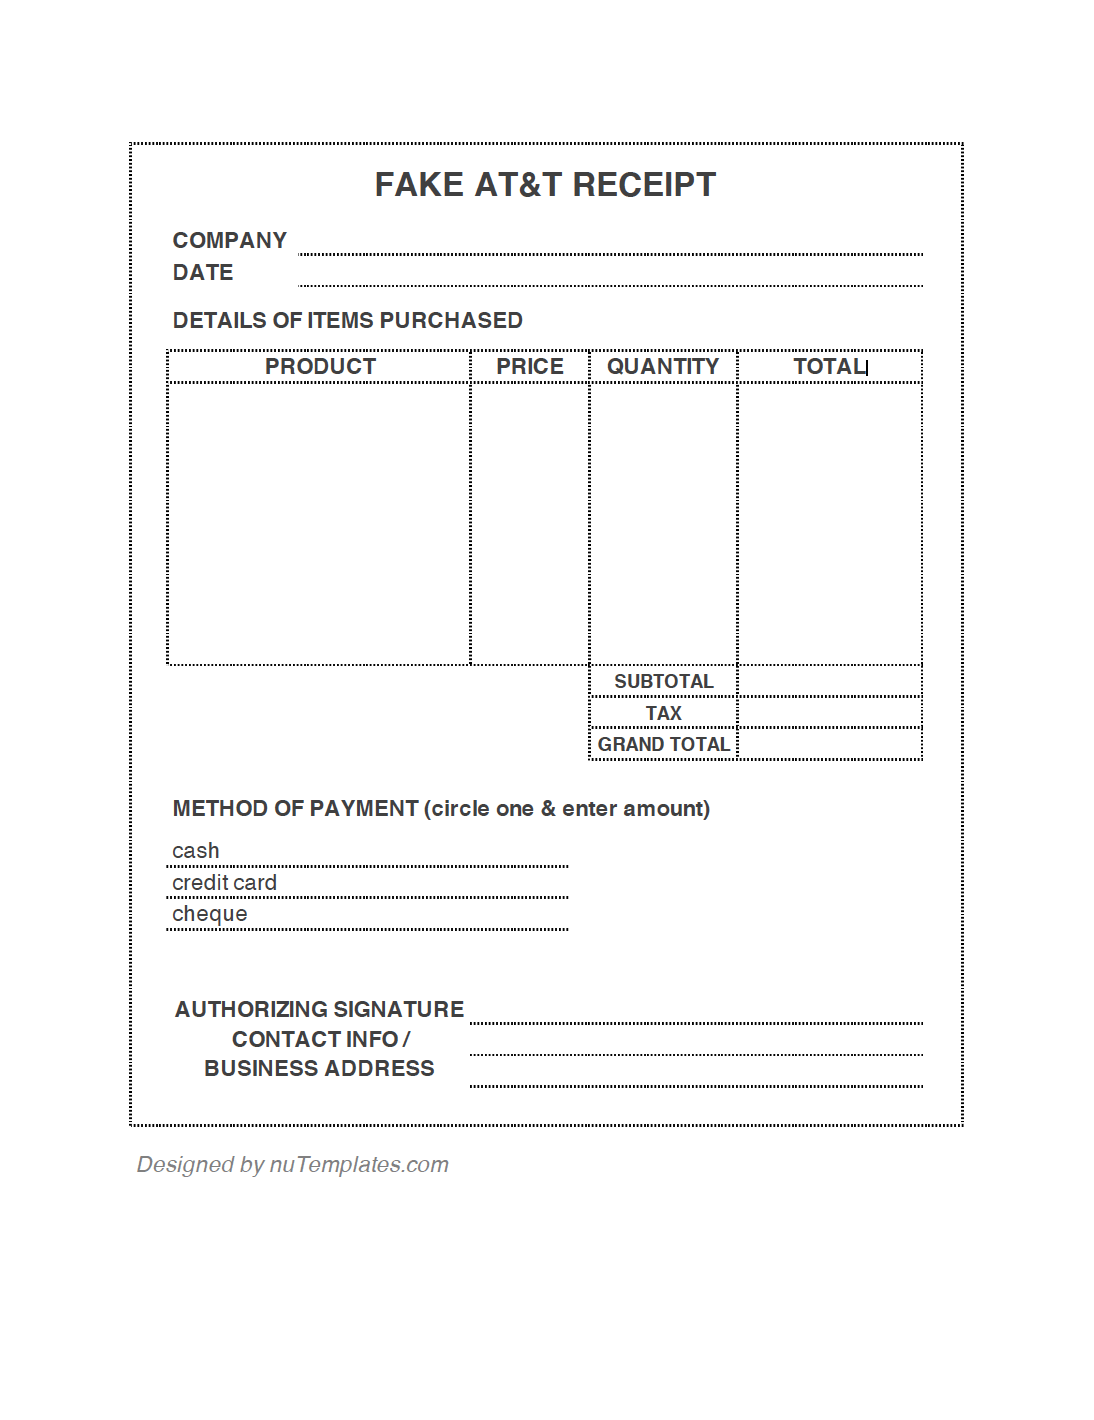 fake-at&t-receipt-jpg